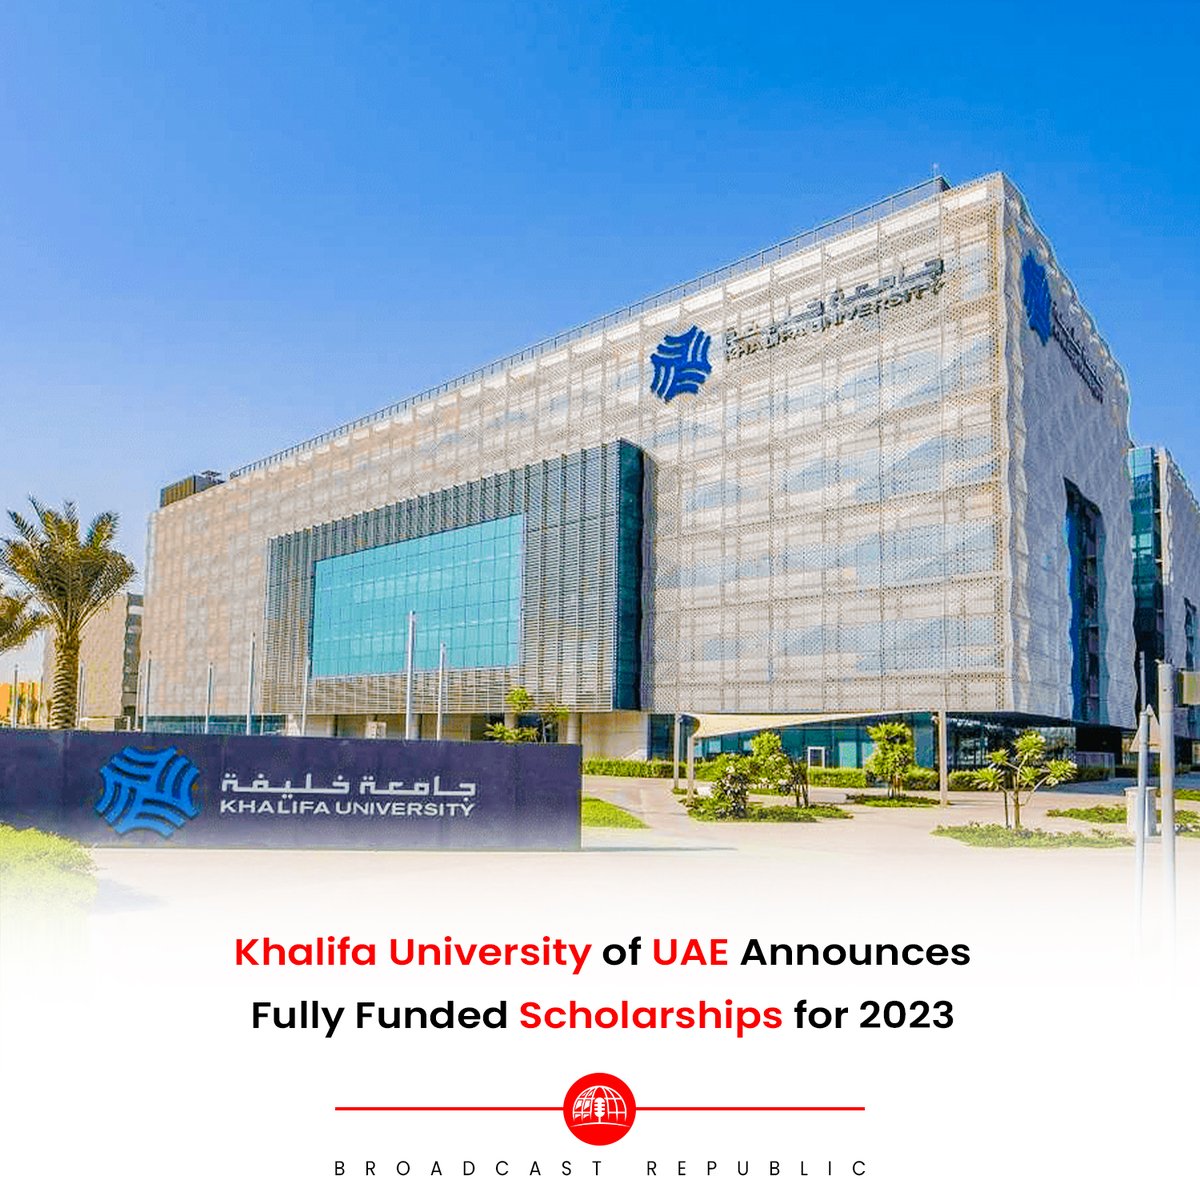 Khalifa University in Abu Dhabi has announced multiple research-based opportunities in MS and Ph.D. for international students enrolled in graduate programs.

#BroadcastRepublic #KhalifaUniversity #UAE #Dubai #Scholarship #Studnets #University #AbuDhabi